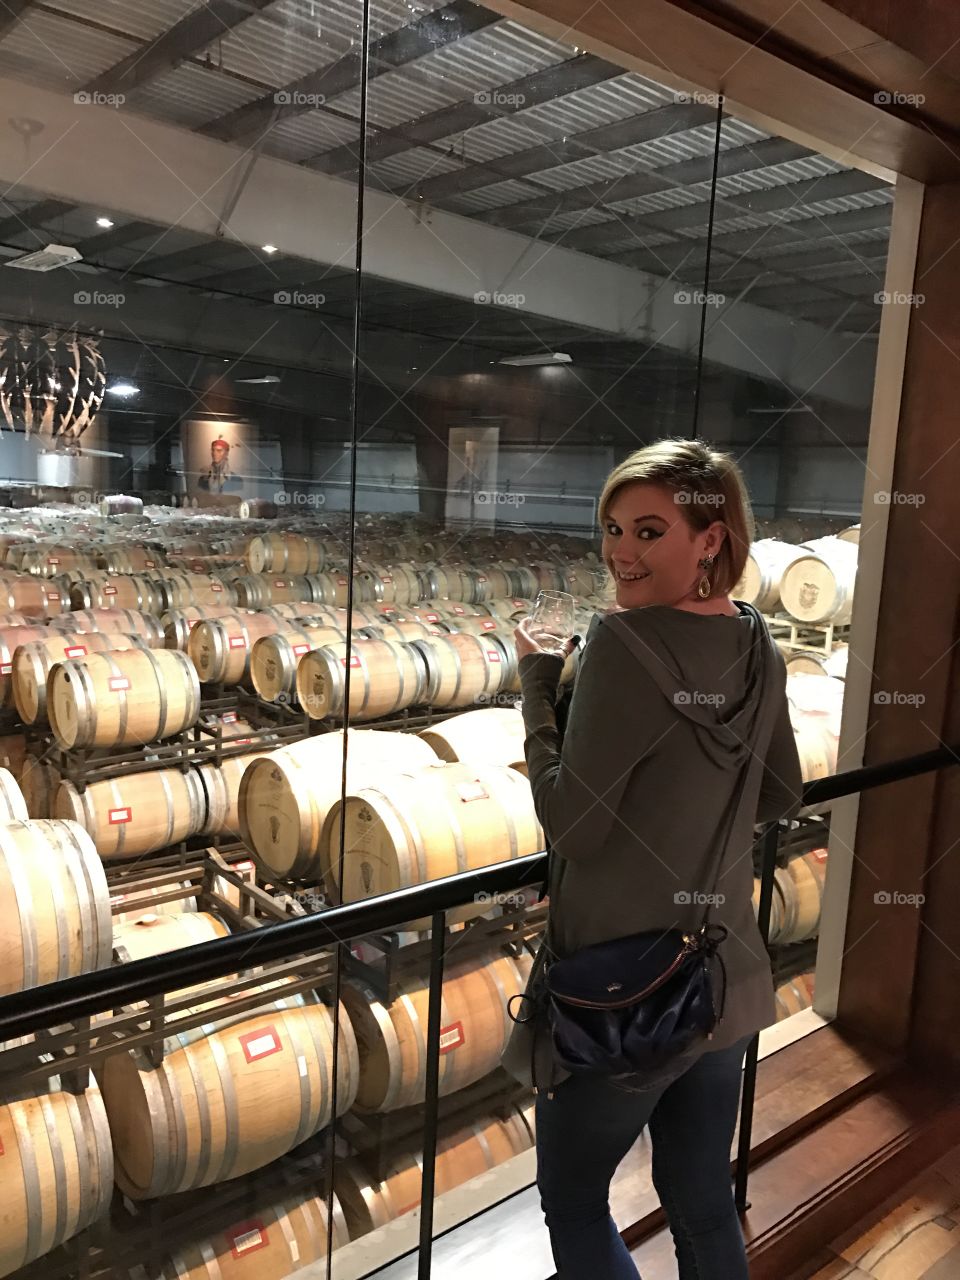 Admiring all the tasty wine